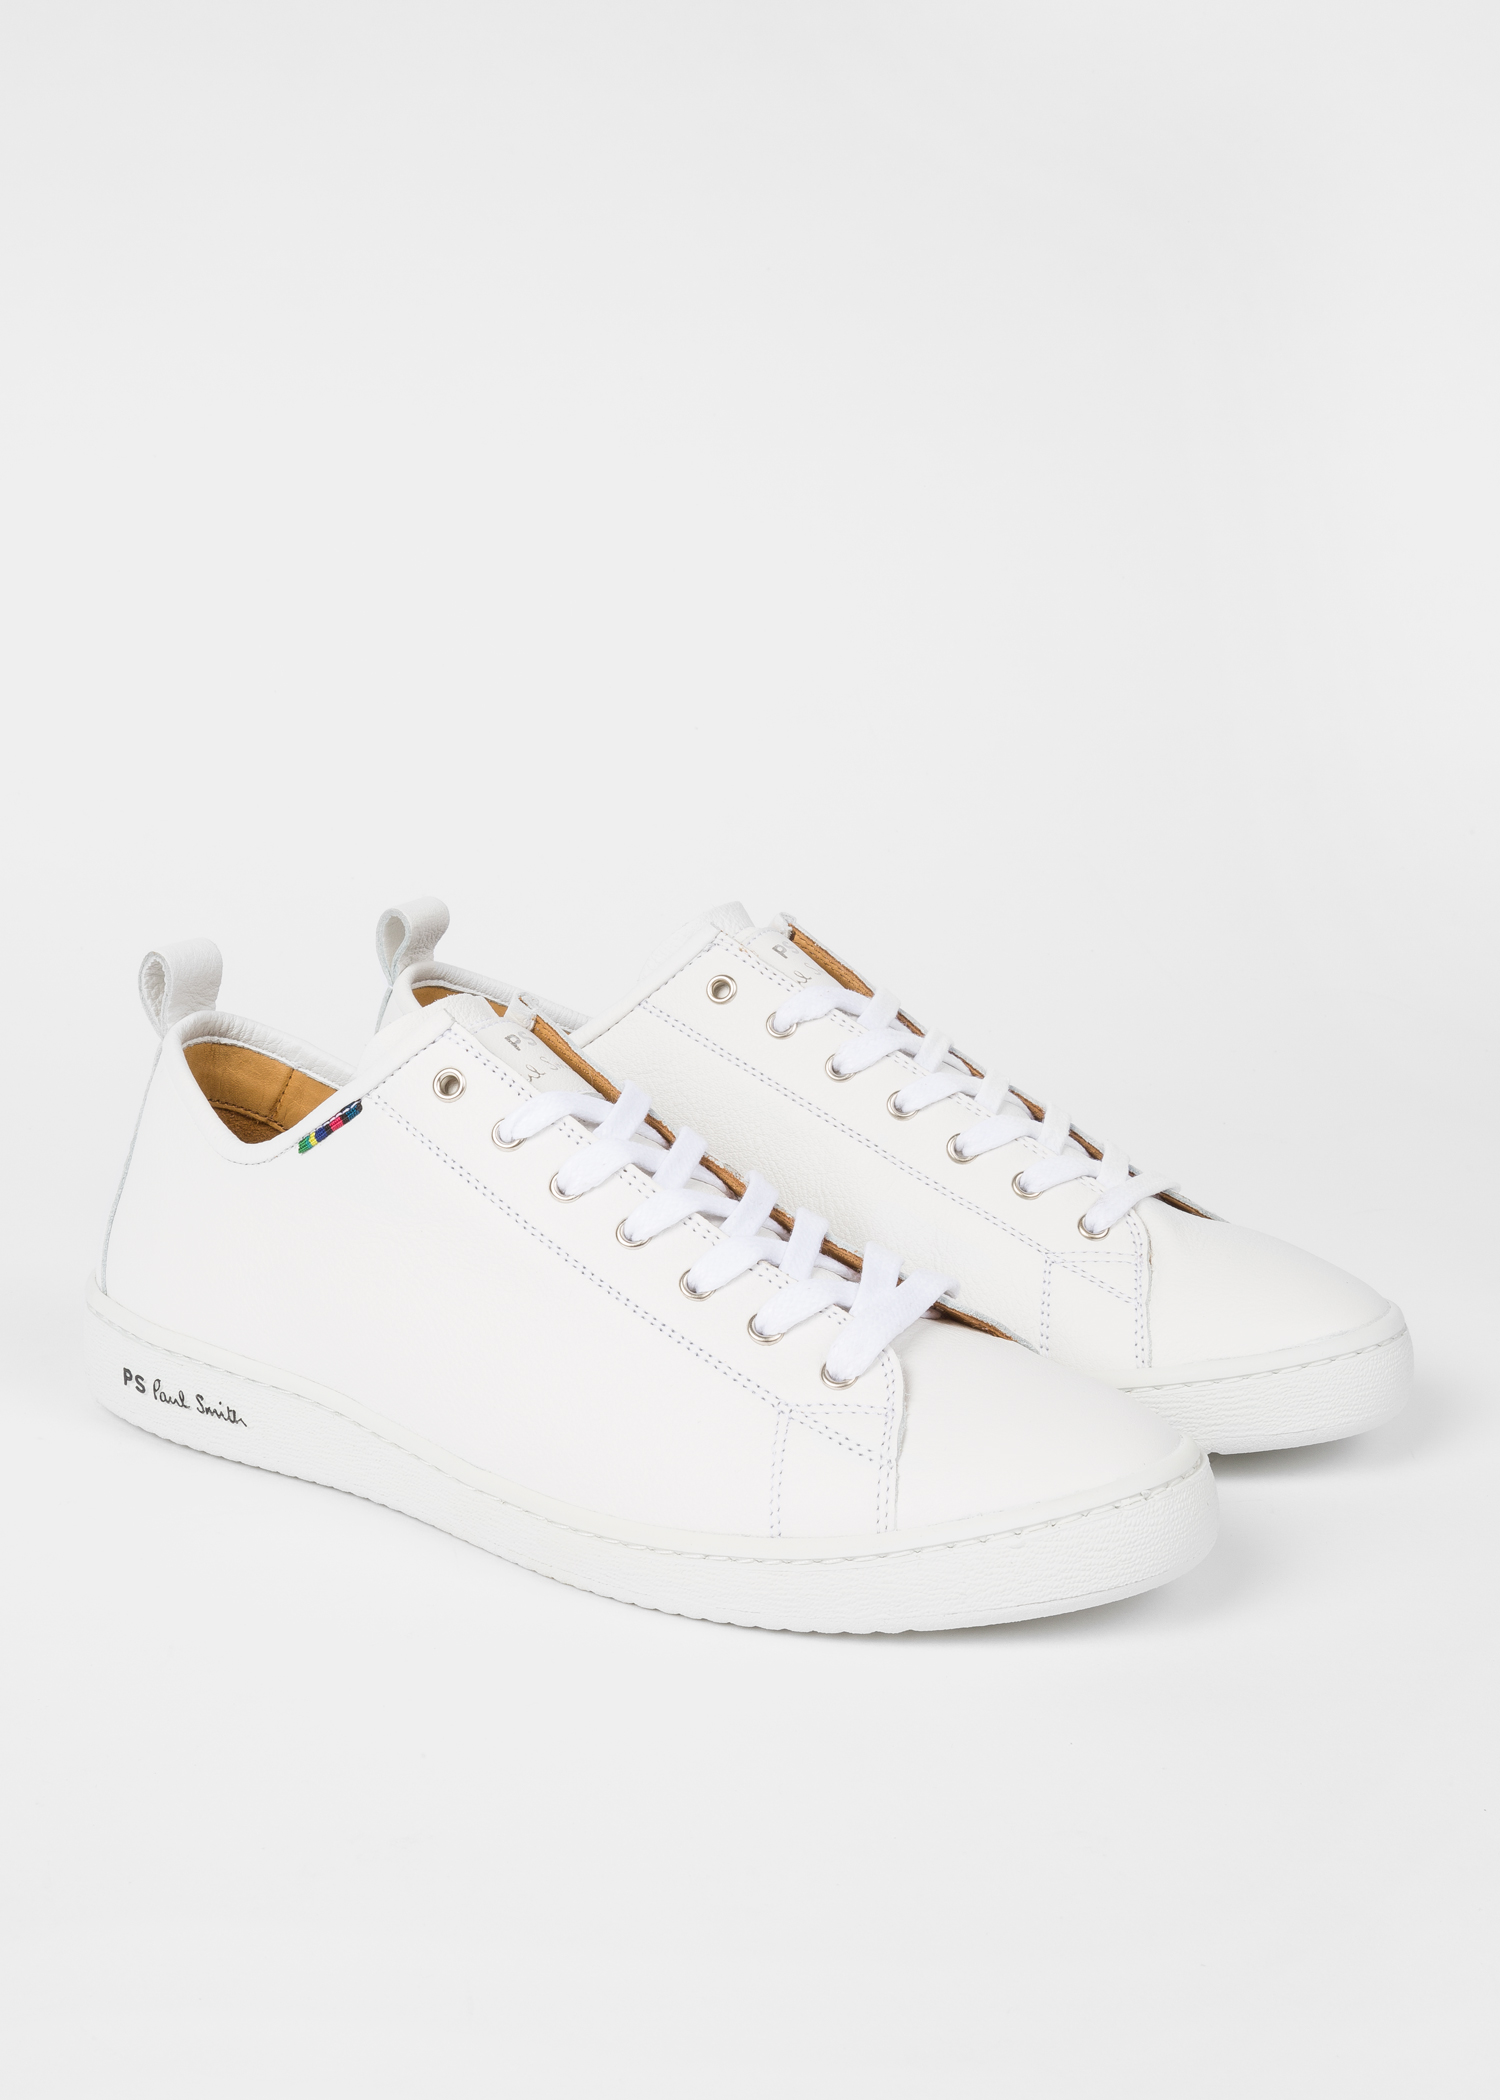 Men's White Calf Leather 'Miyata' Sneakers by Paul Smith